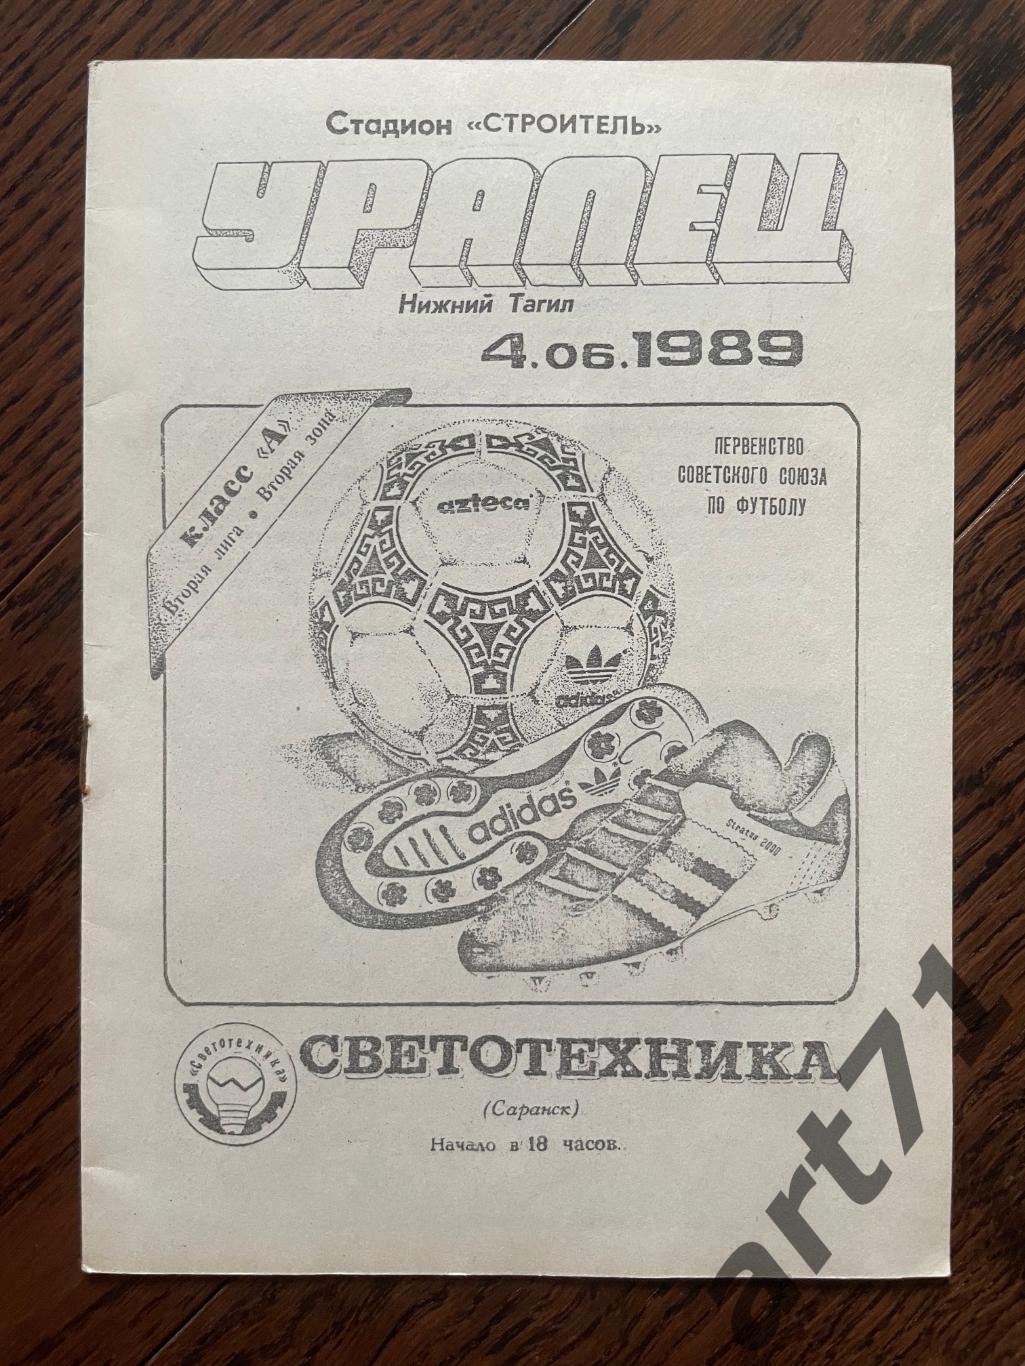 Уралец Нижний Тагил - Светотехника Саранск - 1989